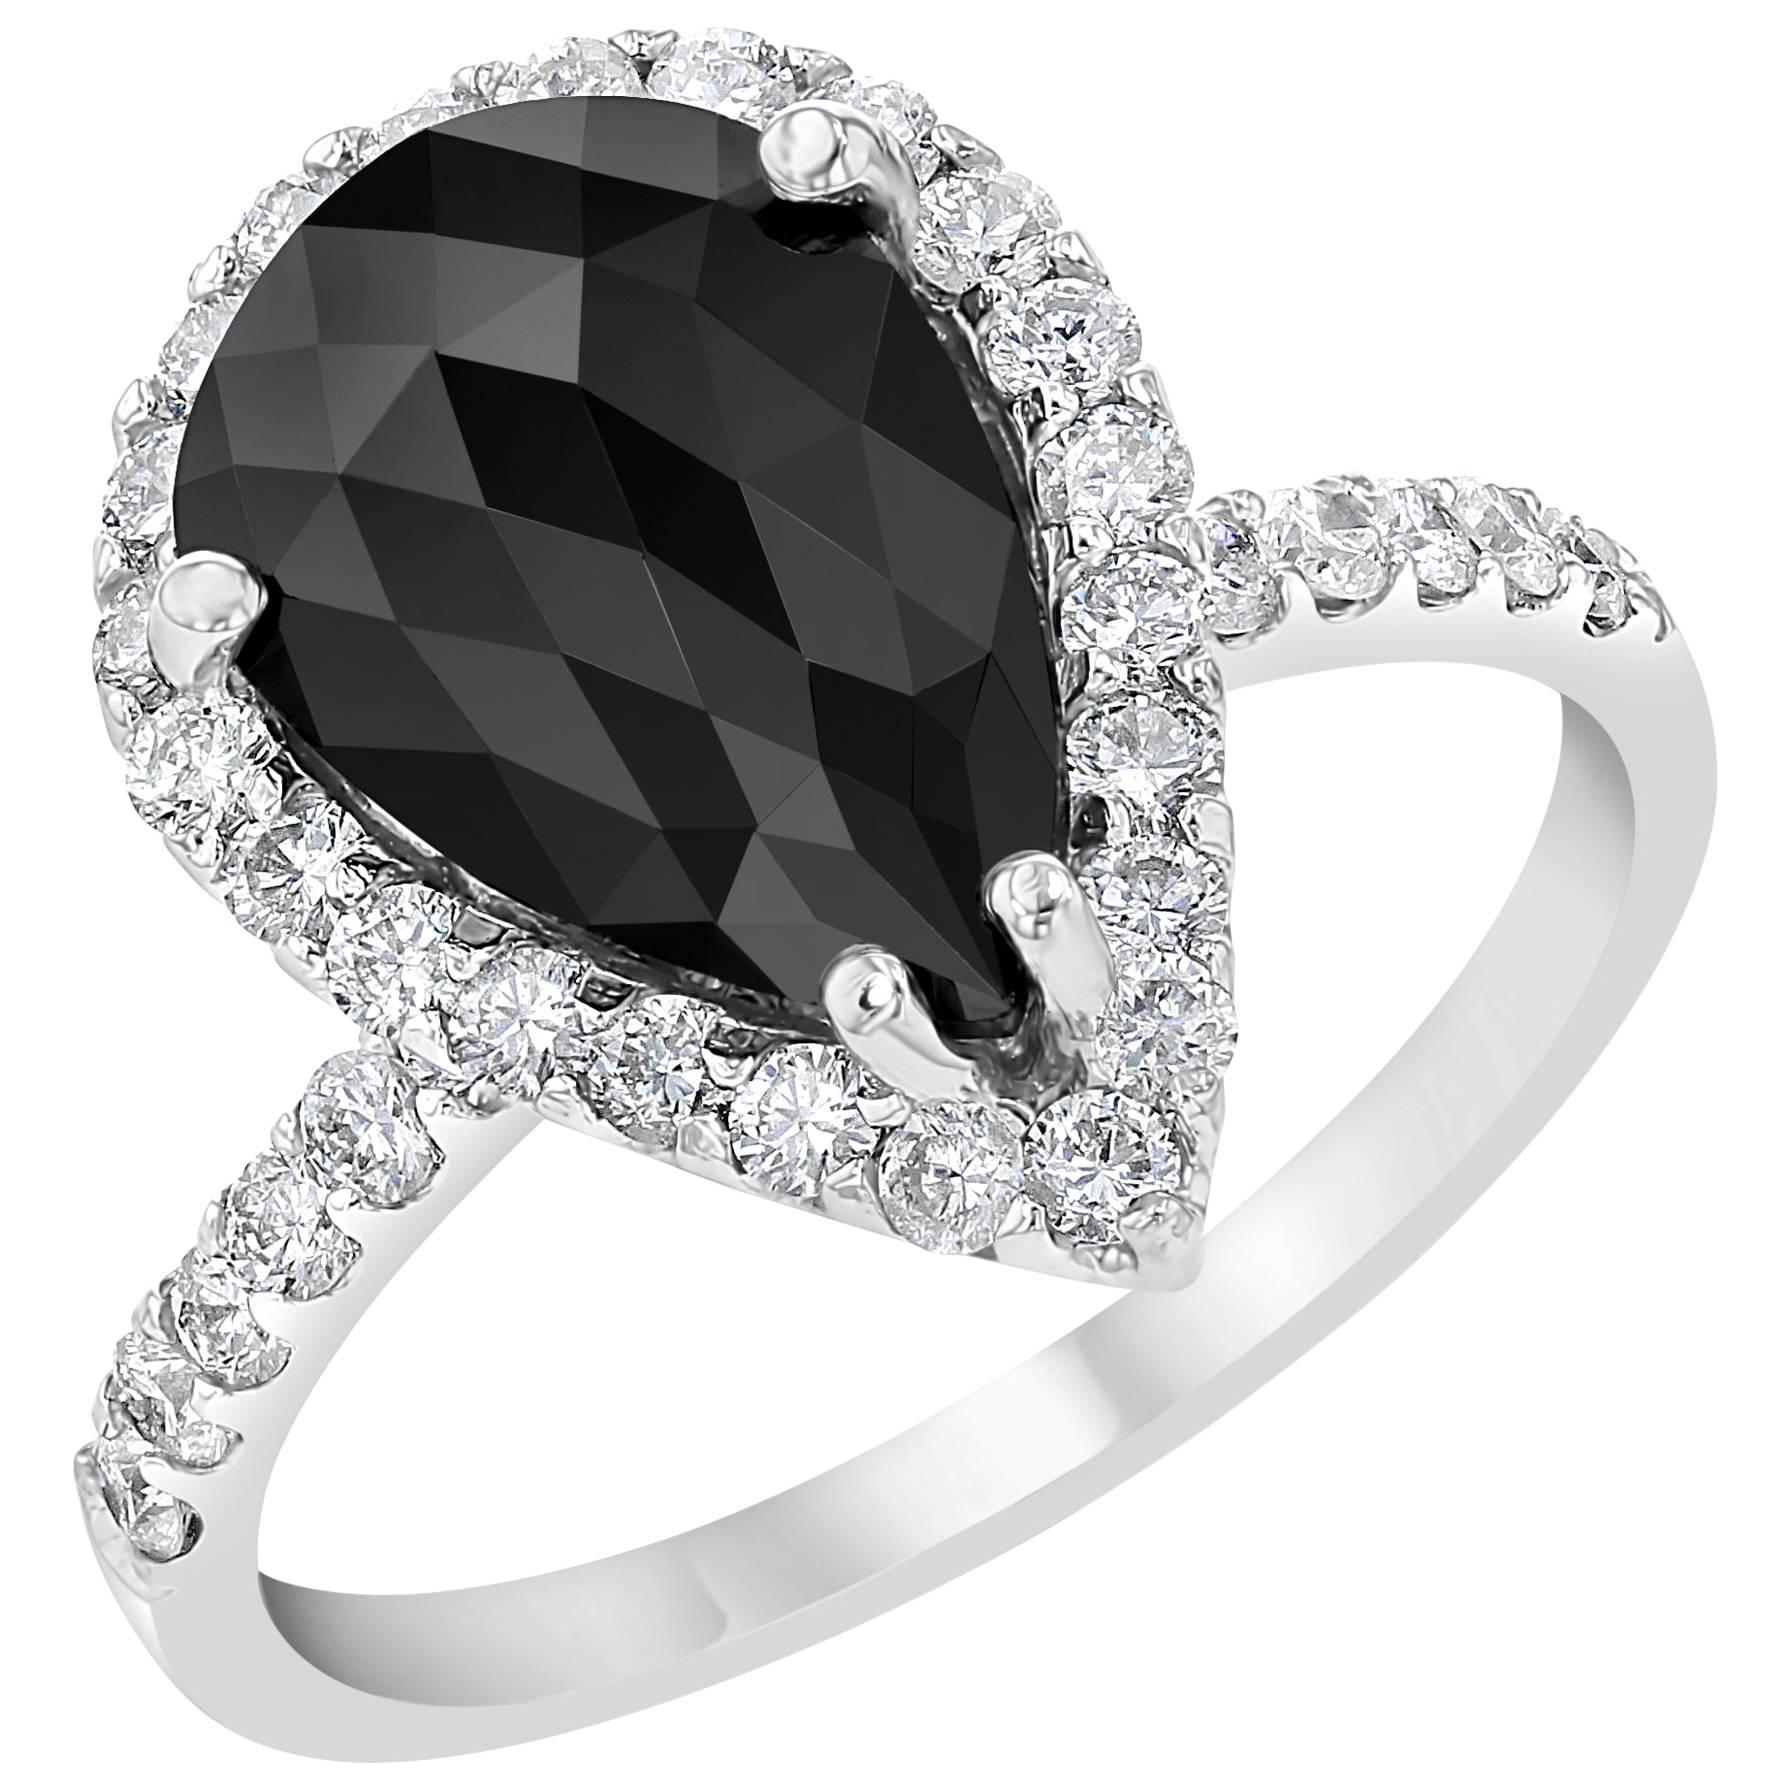 2.53 Carat Black Diamond Engagement Ring